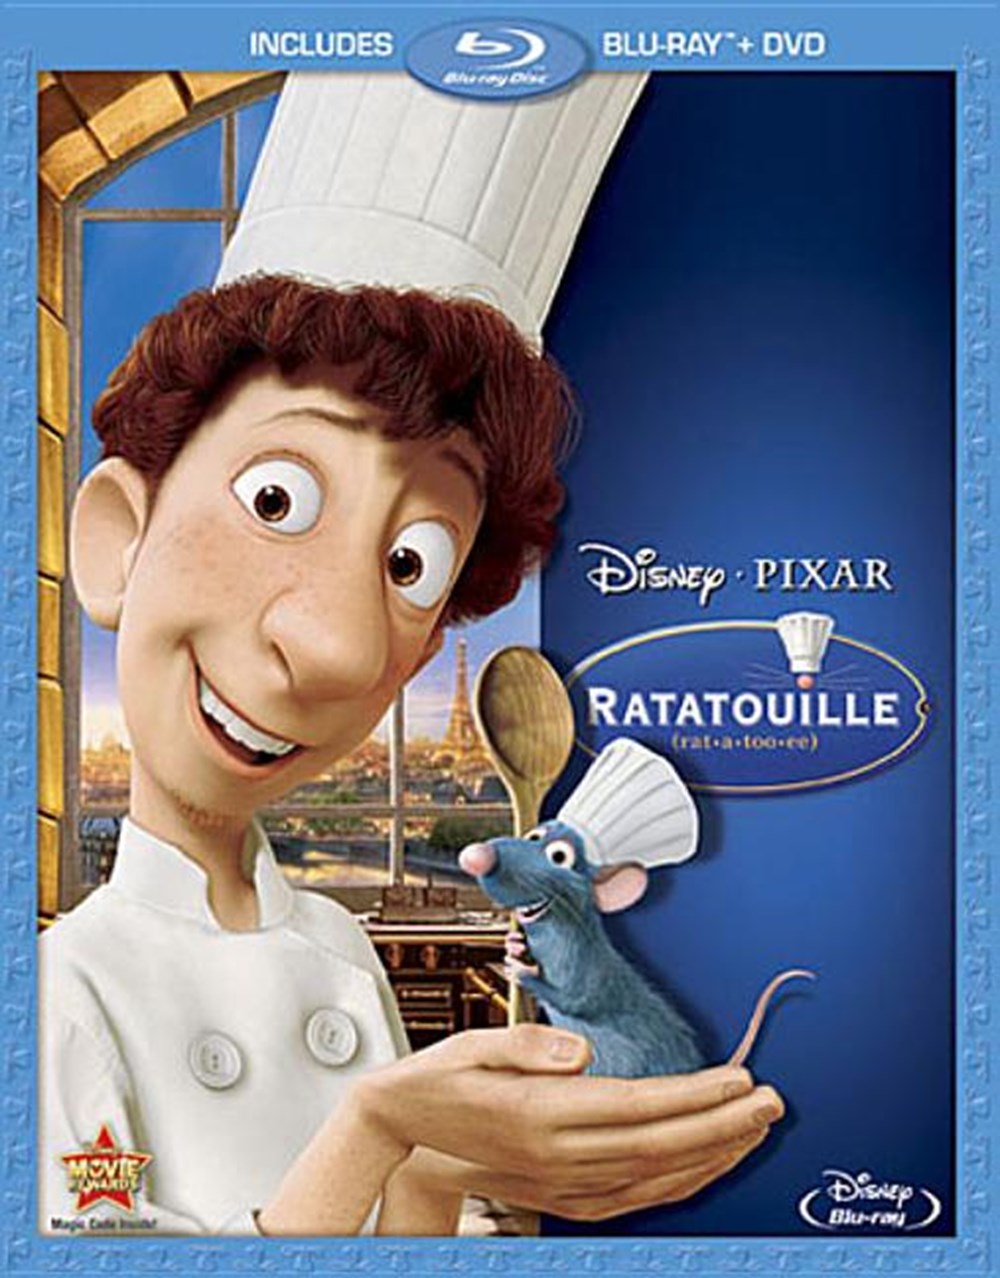 Ratatouille (DVD Included)